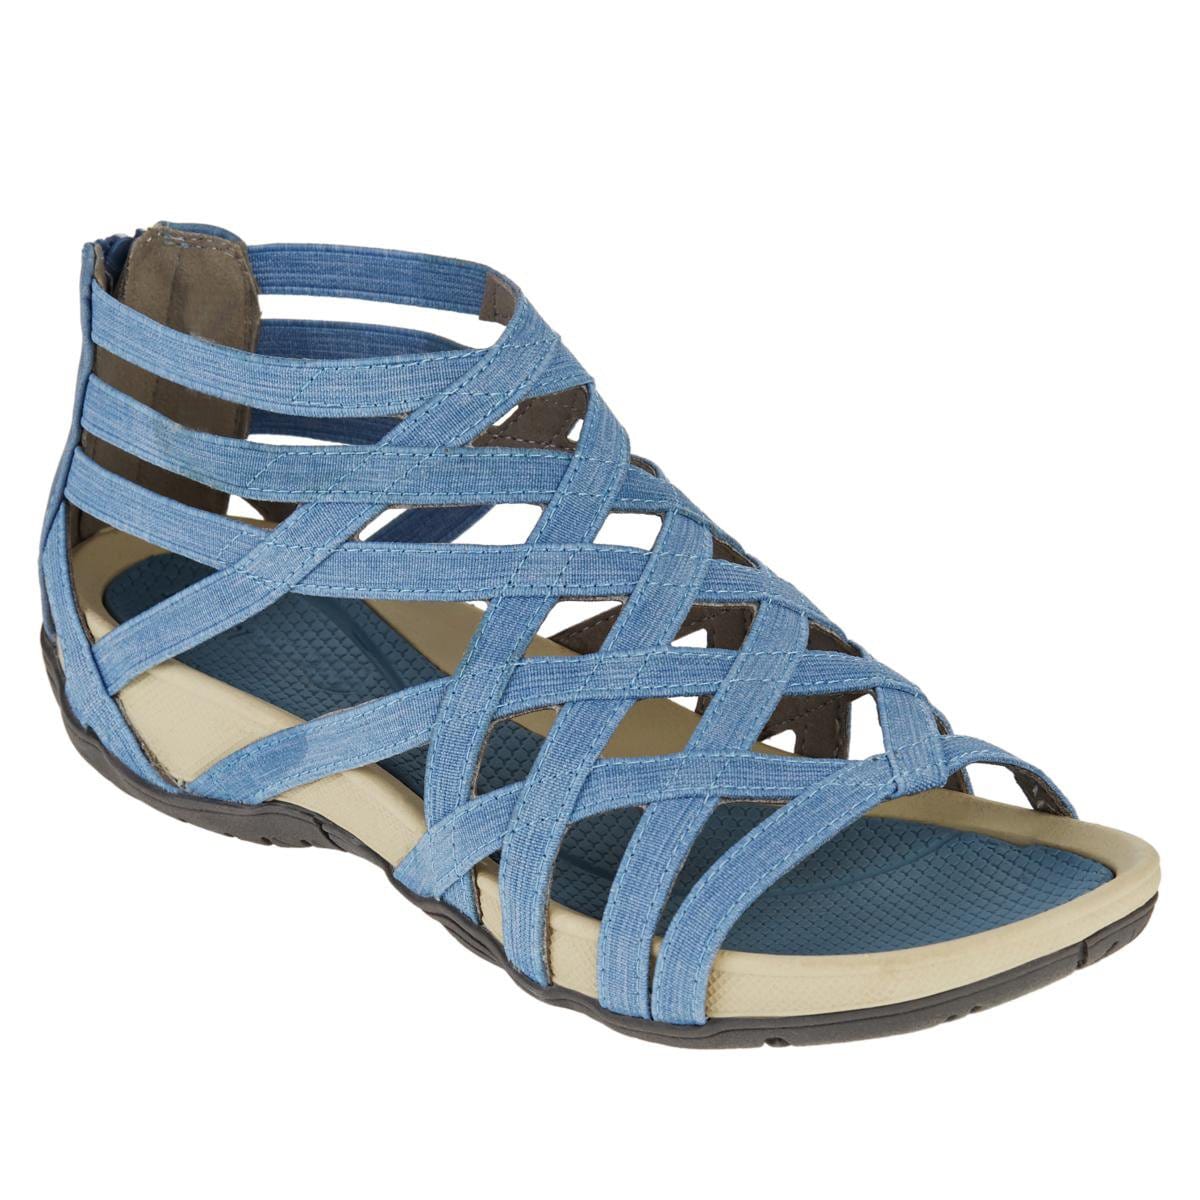 Sandals 2 / BLUE Elastic Strap Soft Sole Sandals